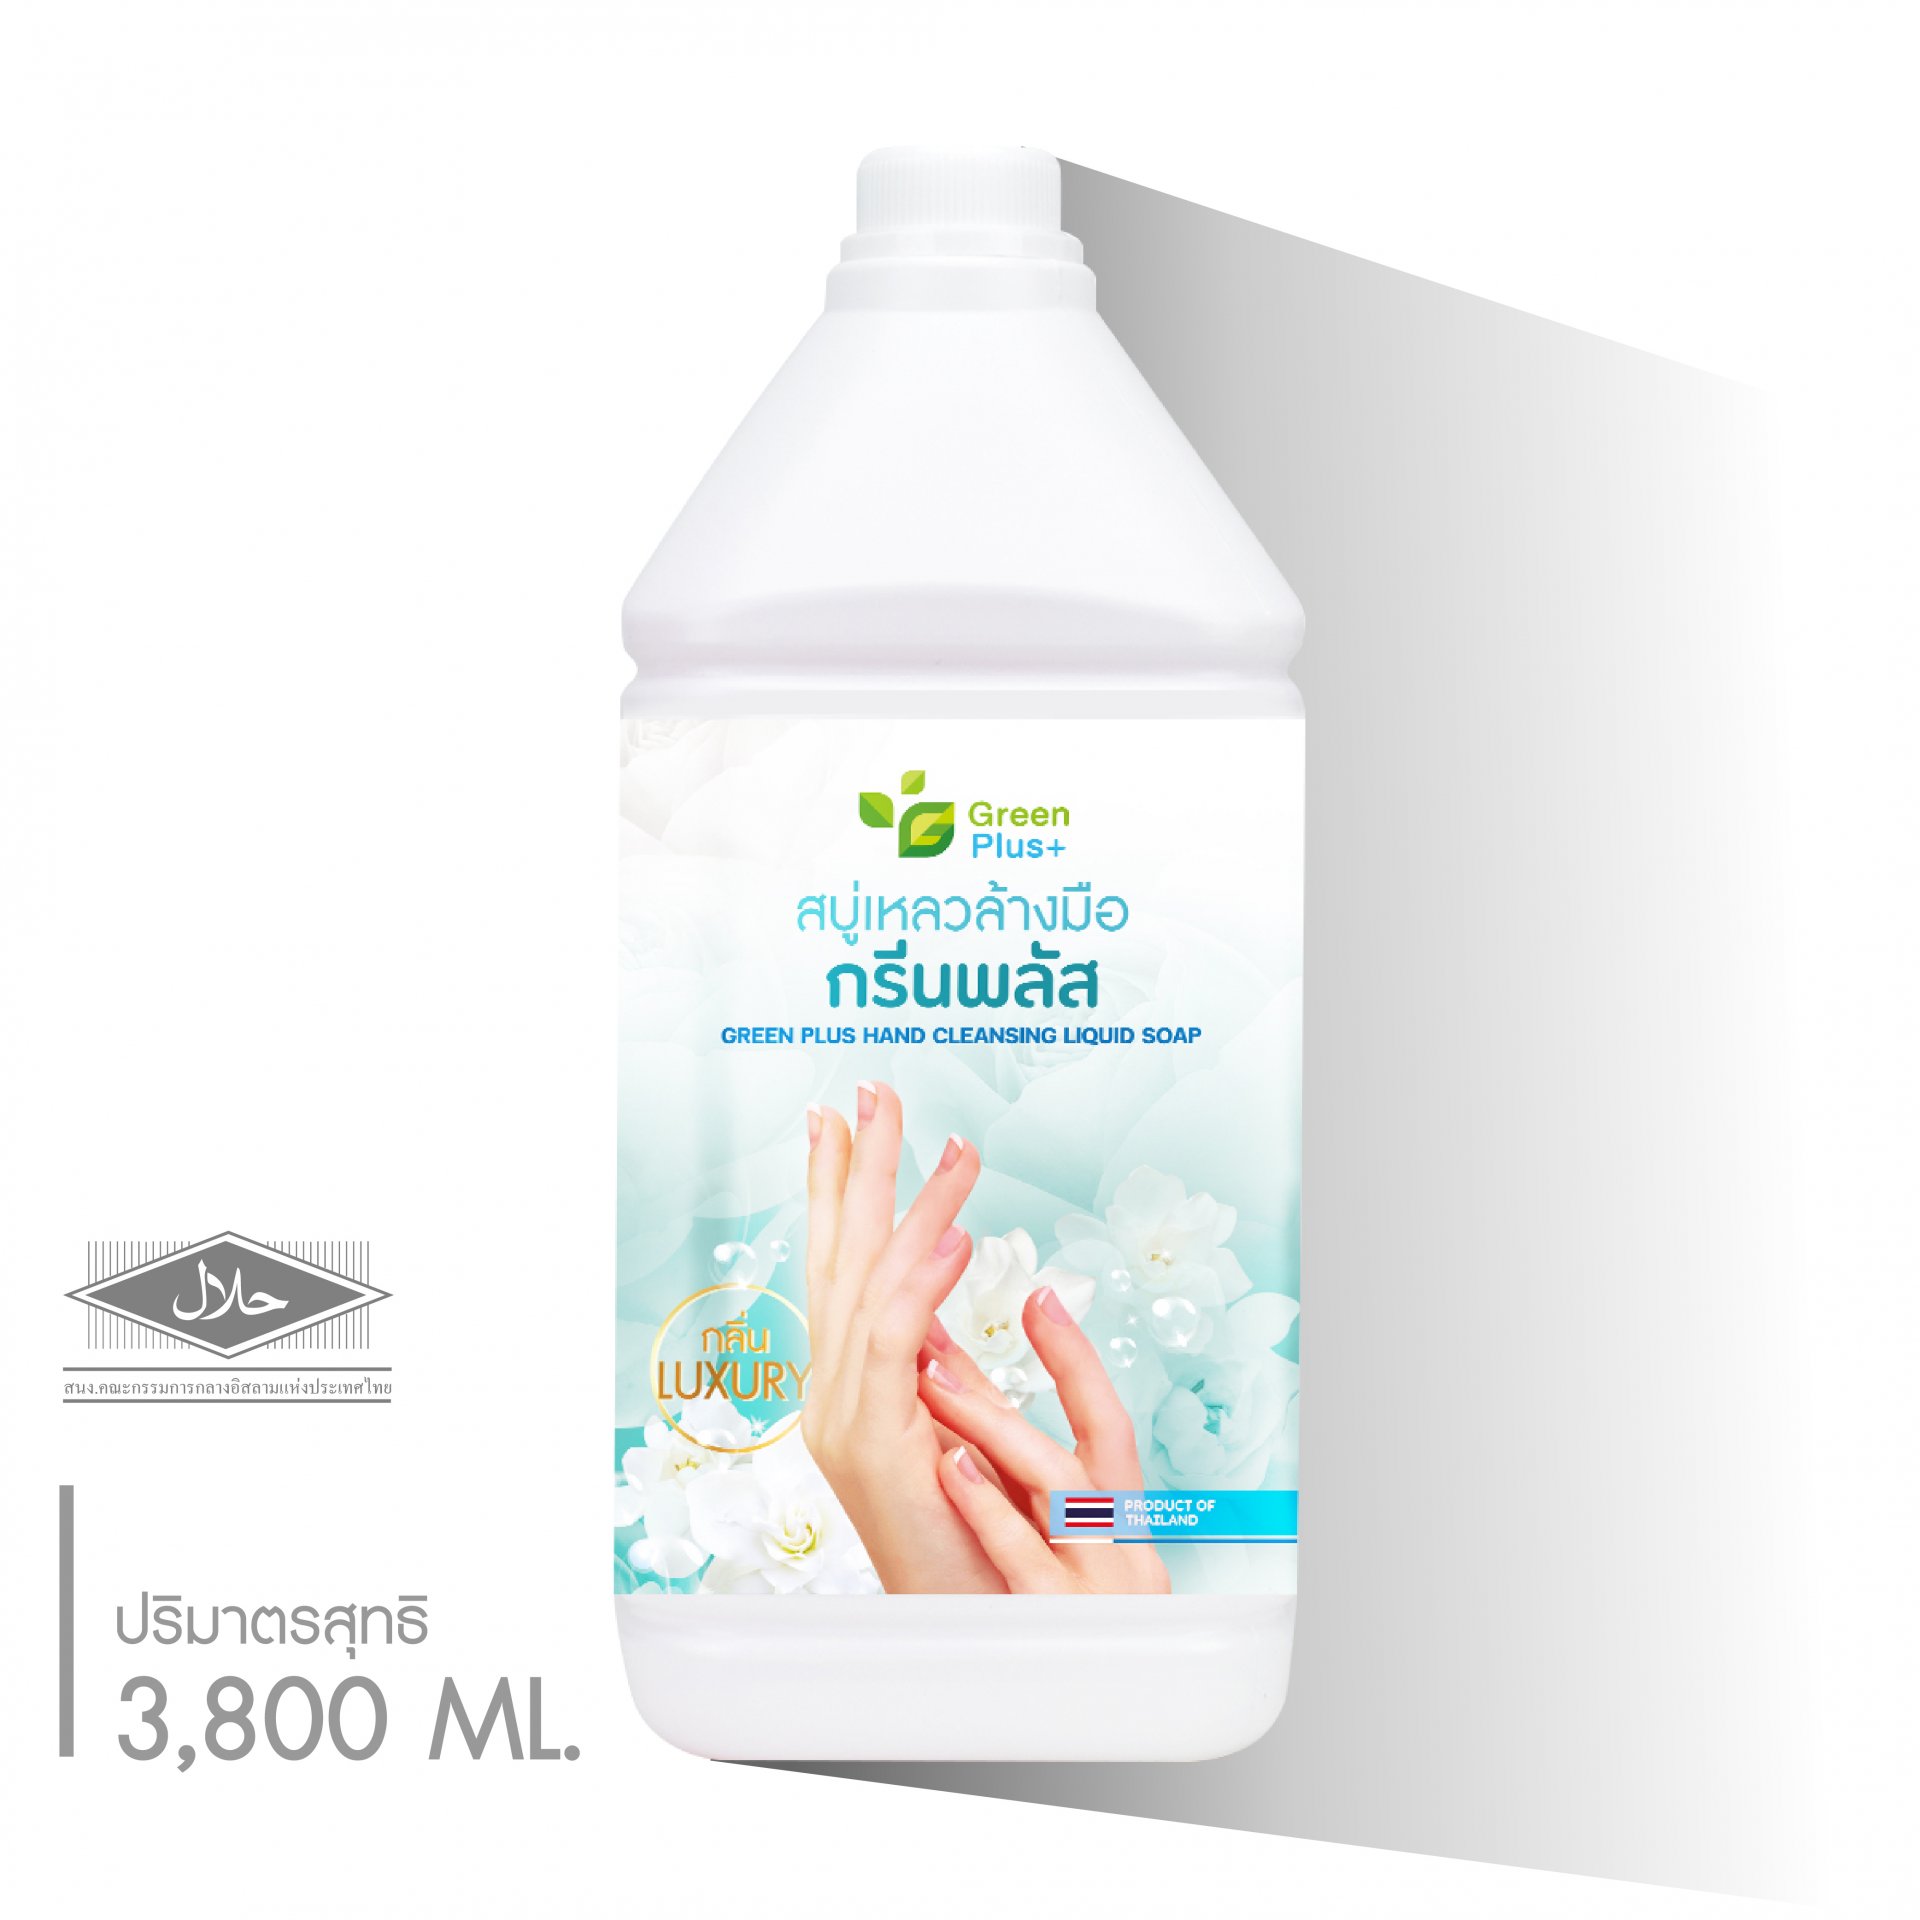 GREEN PLUS HAND CLEANSING LIQUID SOAP : LUXURY